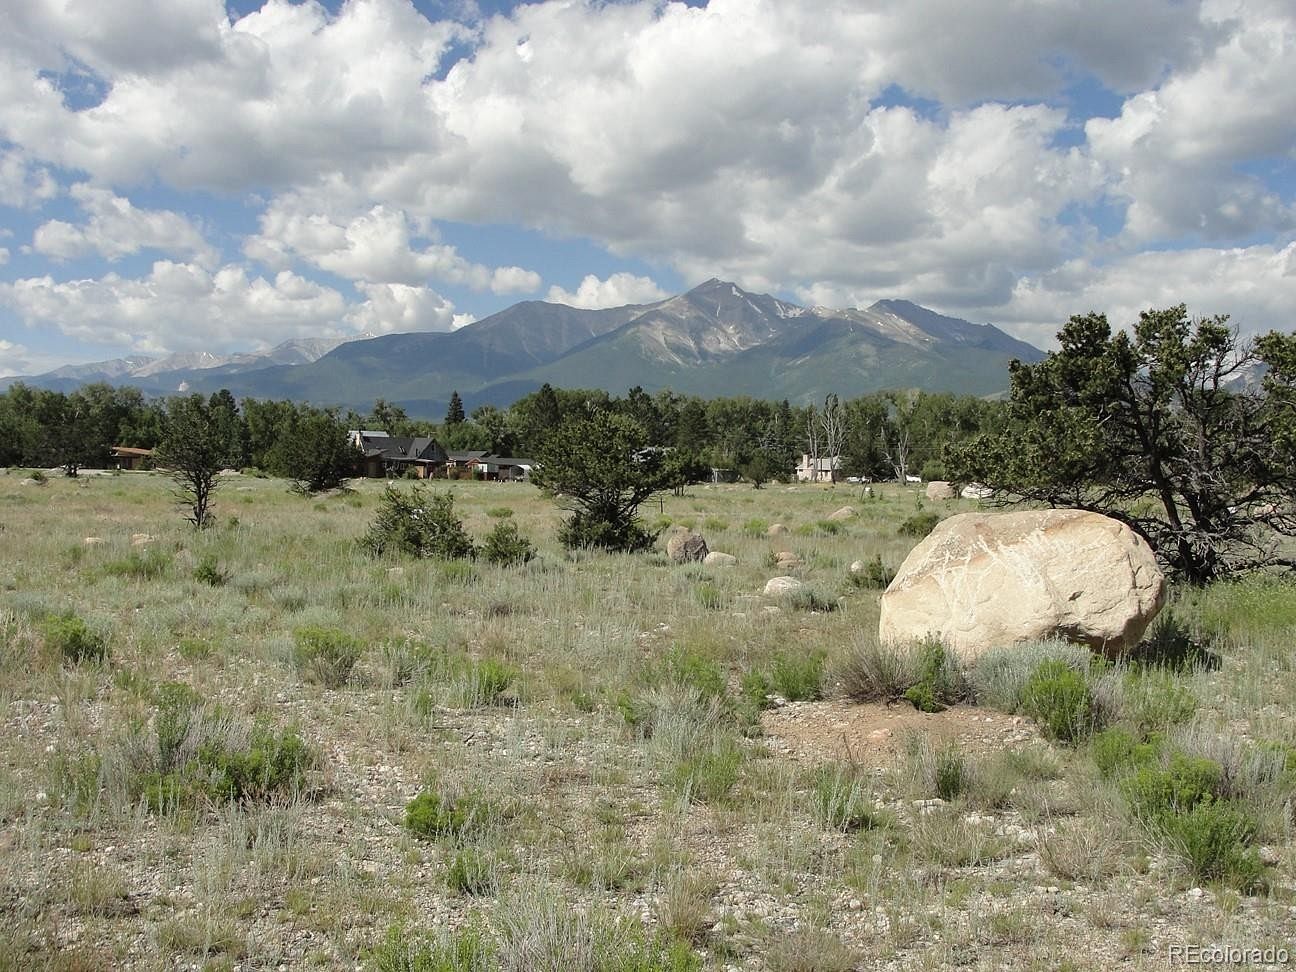 0.83 Acres of Residential Land for Sale in Buena Vista, Colorado